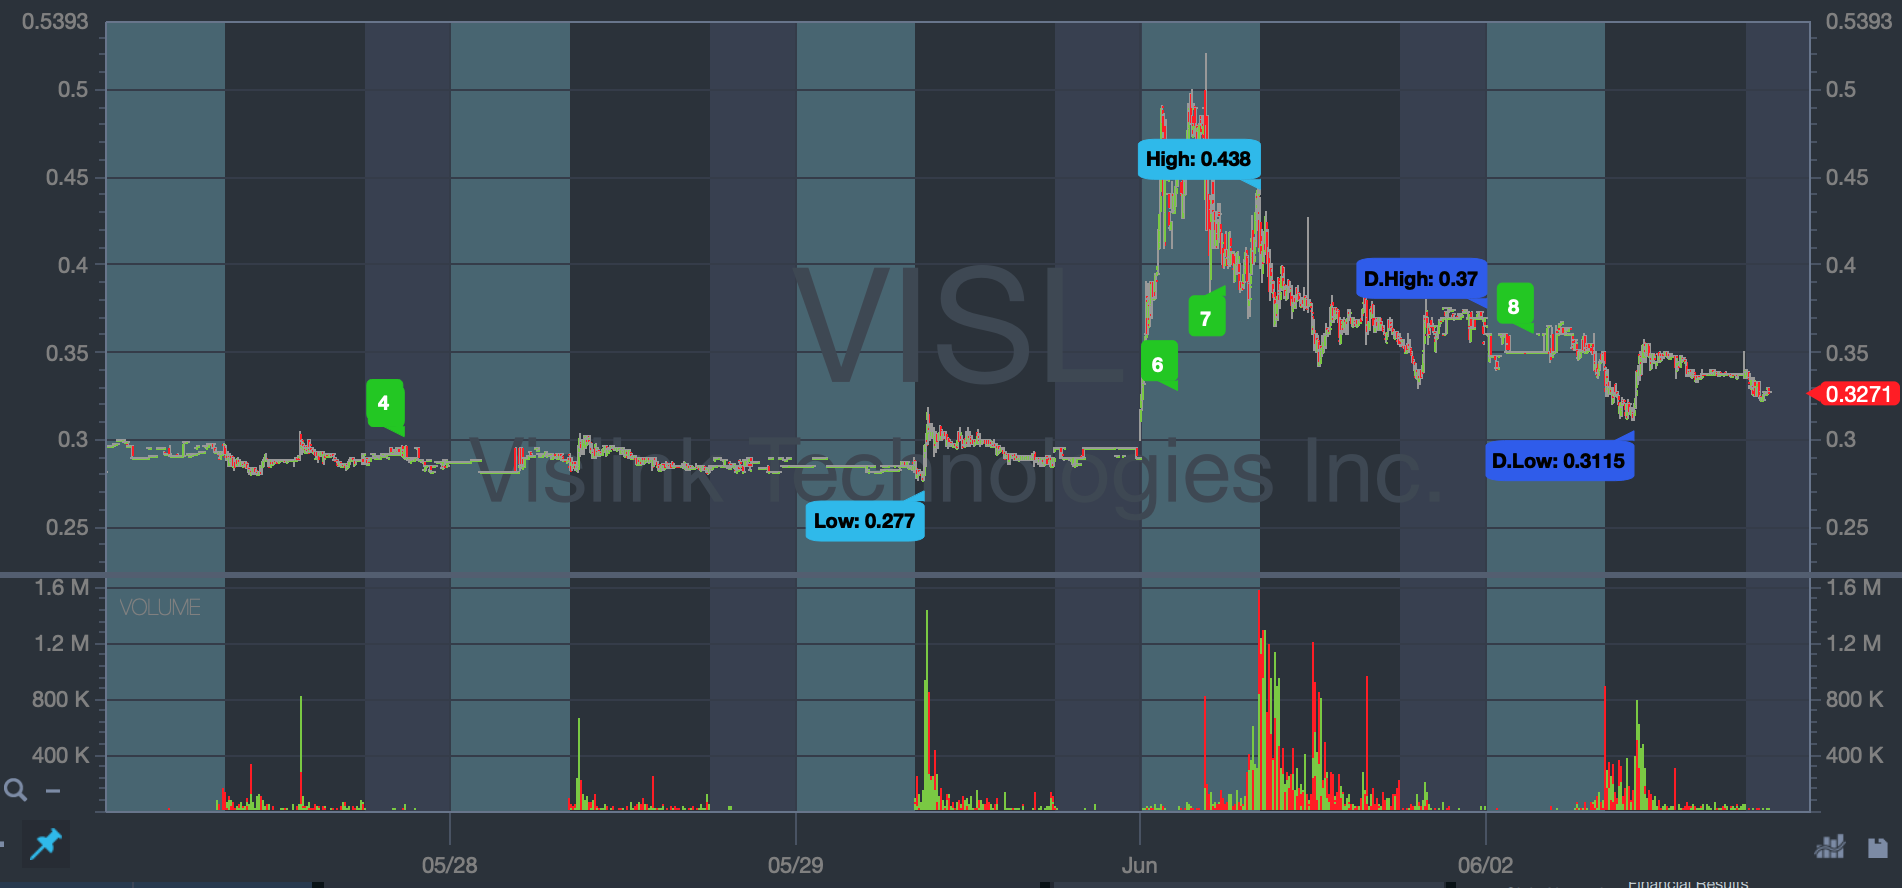 VISL stock chart